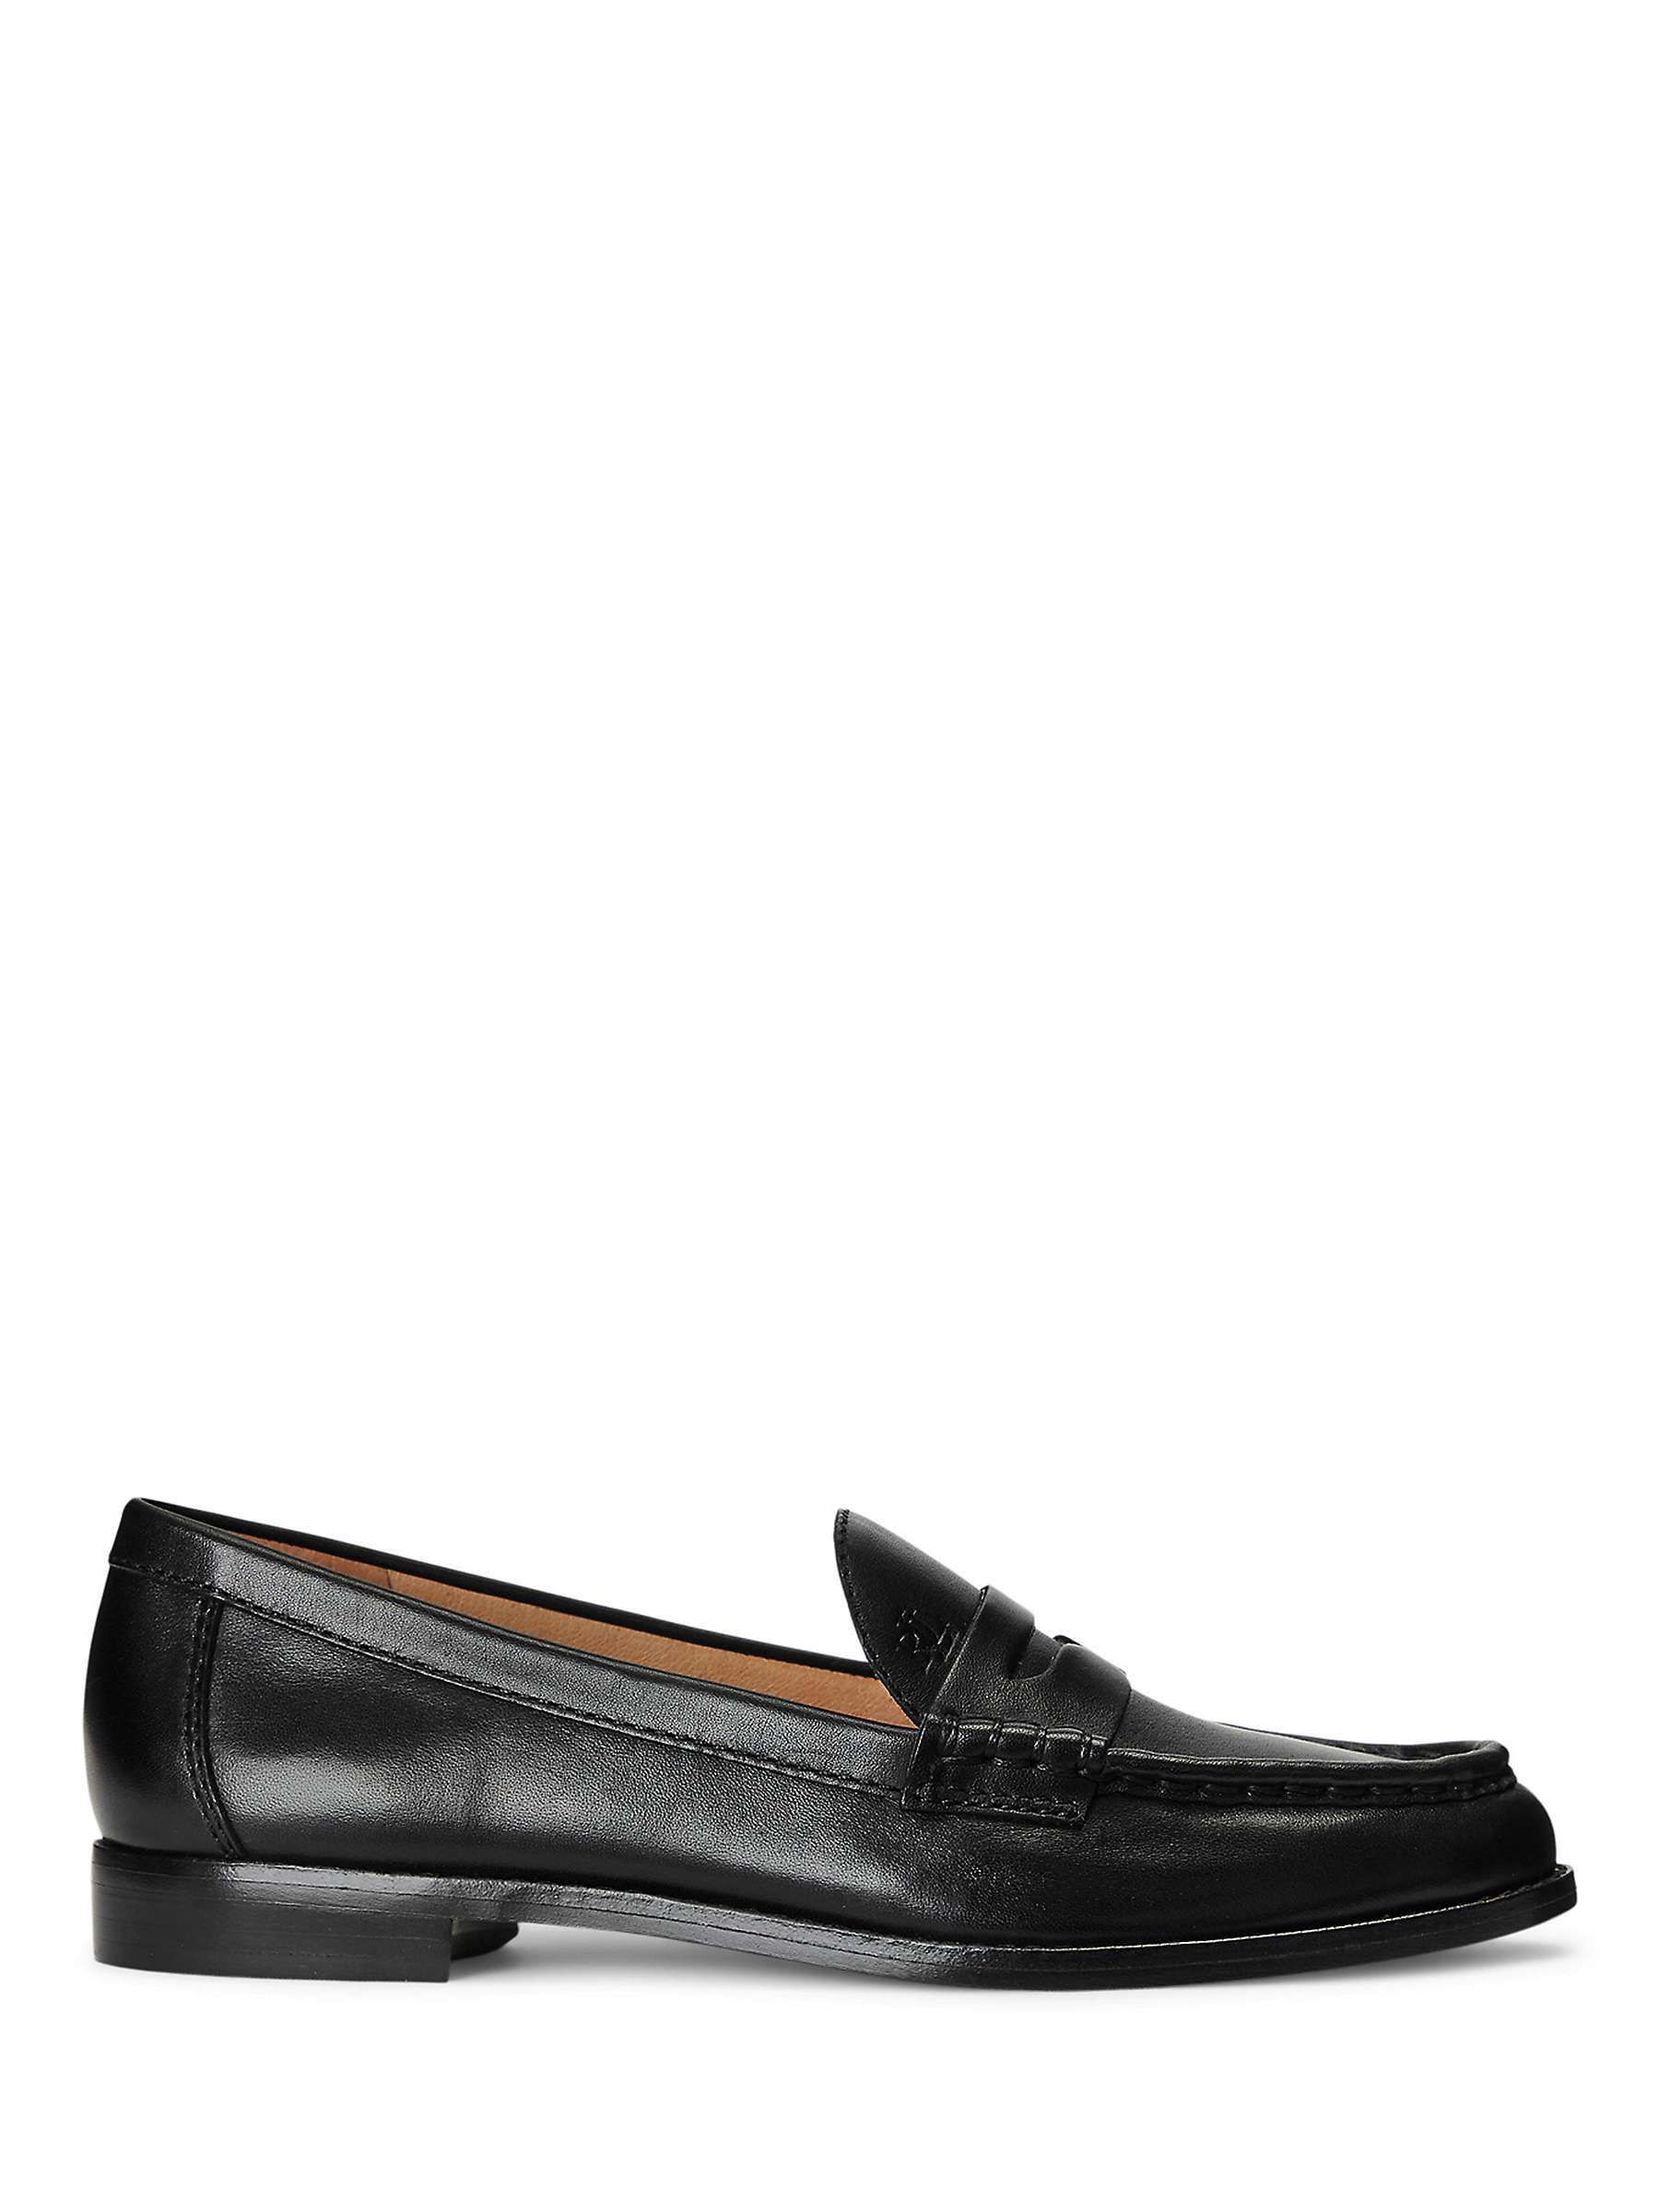 Lauren Ralph Lauren Winnie Leather Loafers, Black at John Lewis & Partners